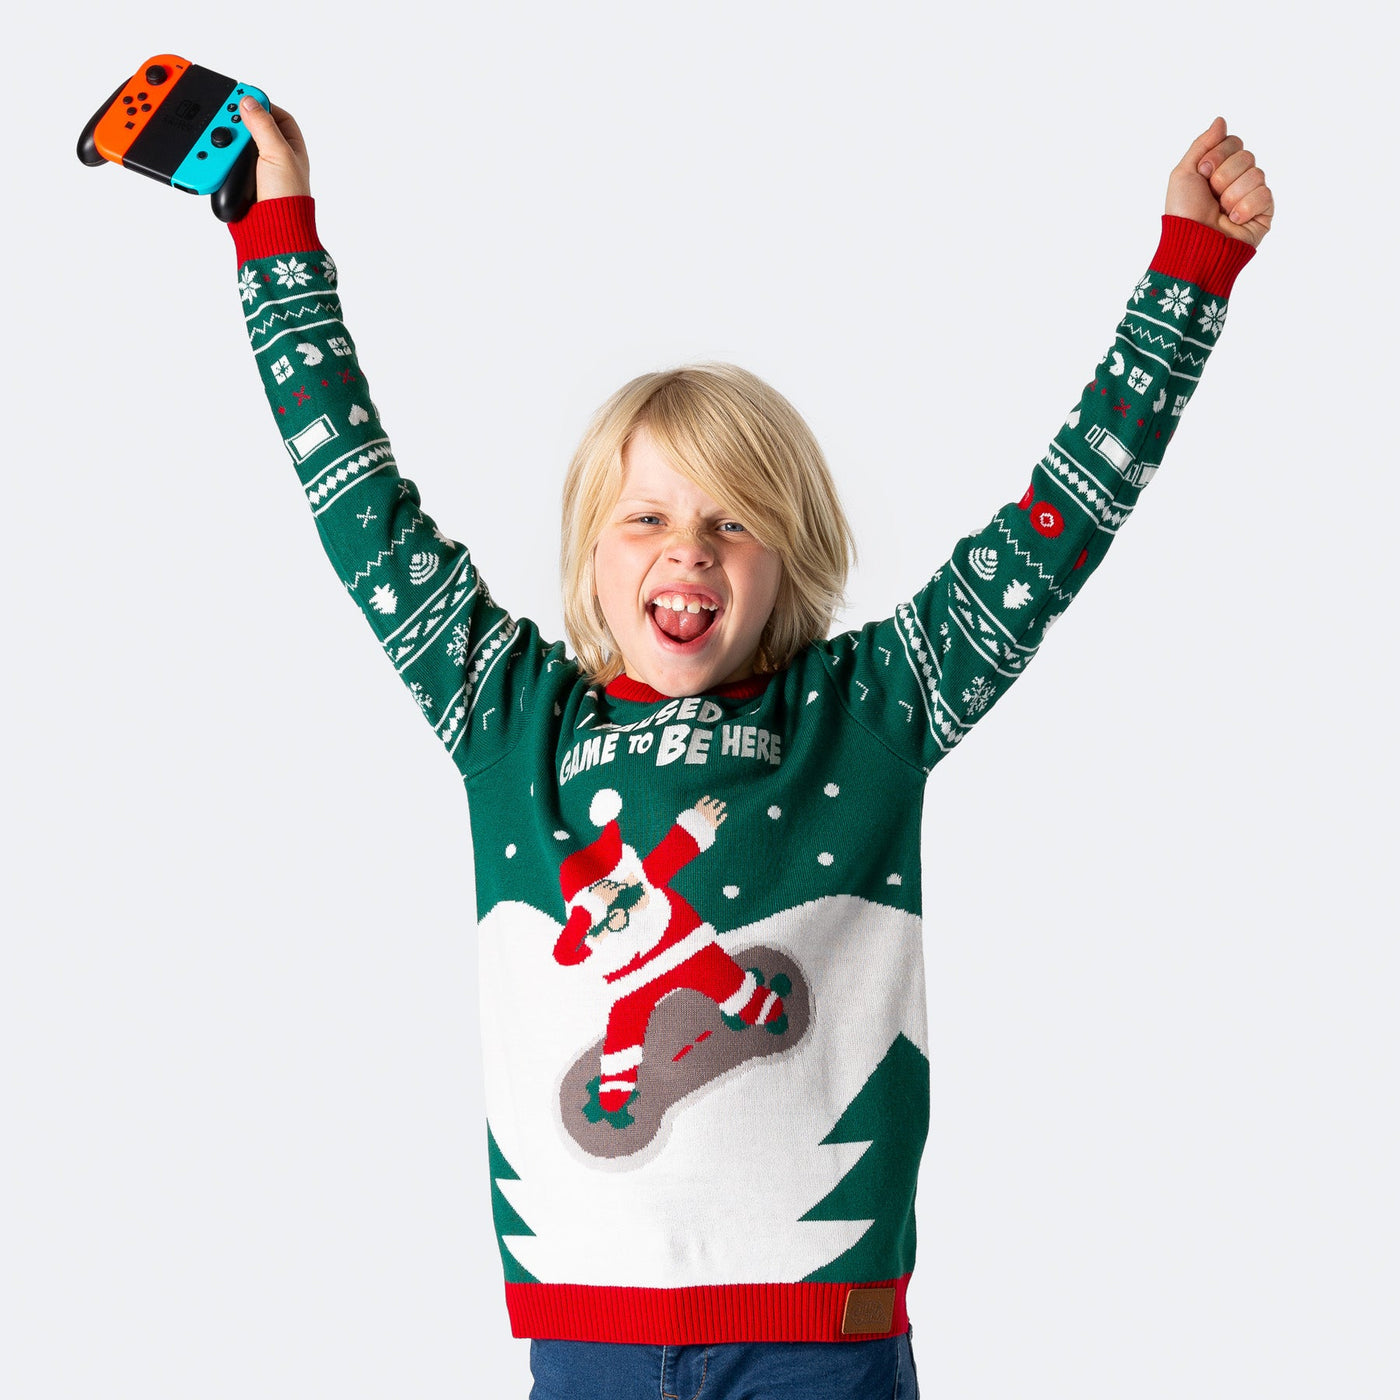 Kids' Gamer Christmas Sweater